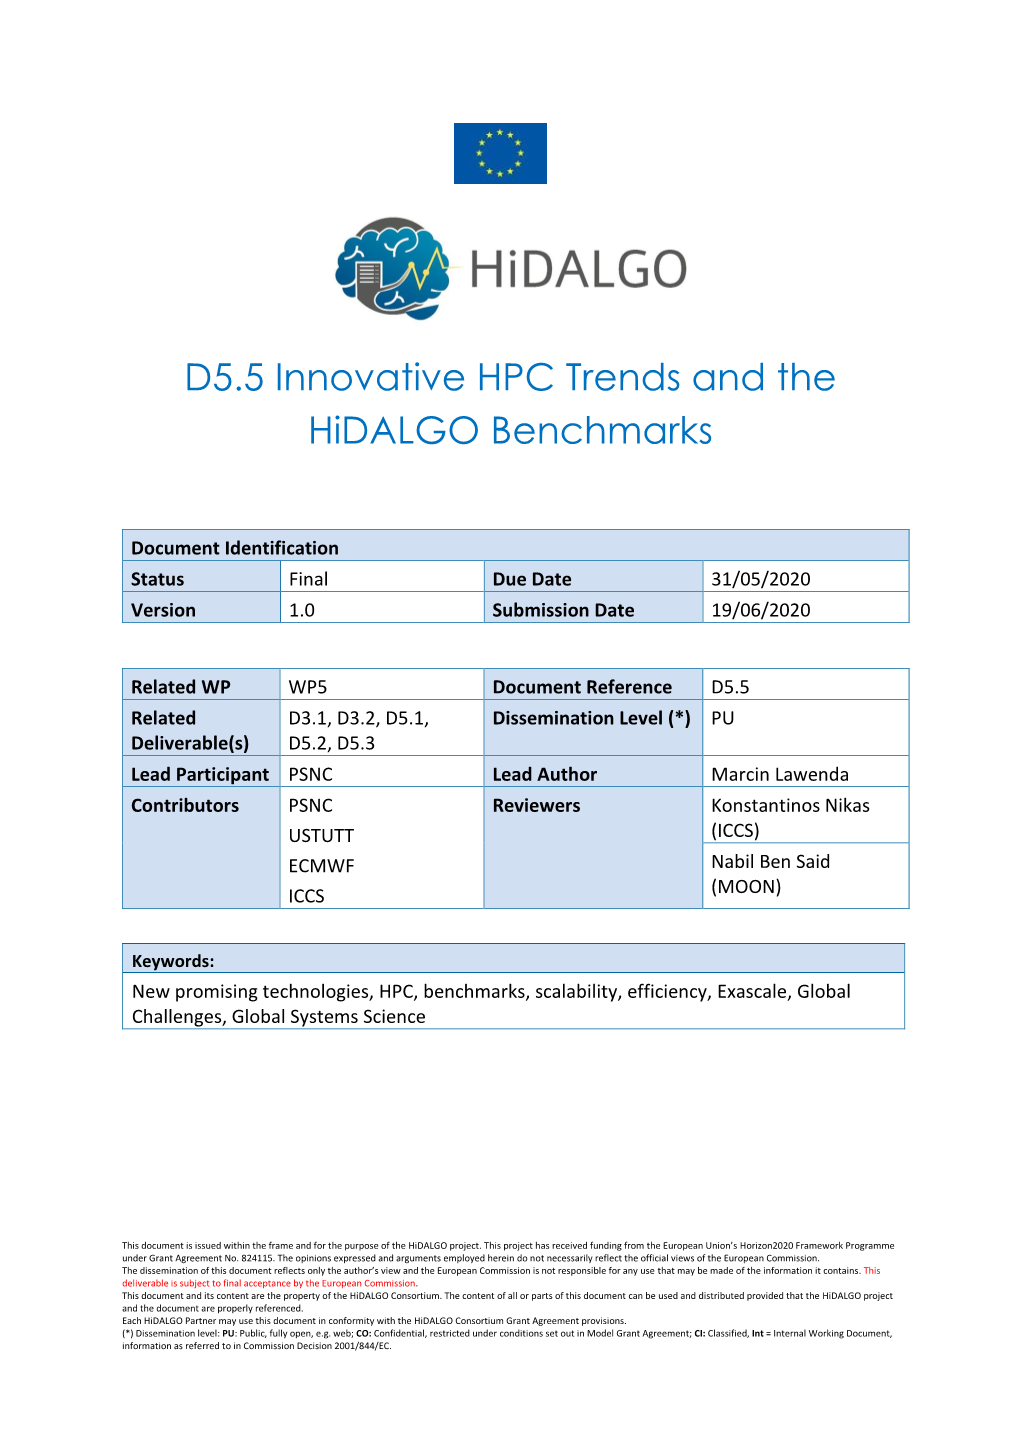 D5.5 Innovative HPC Trends and the Hidalgo Benchmarks